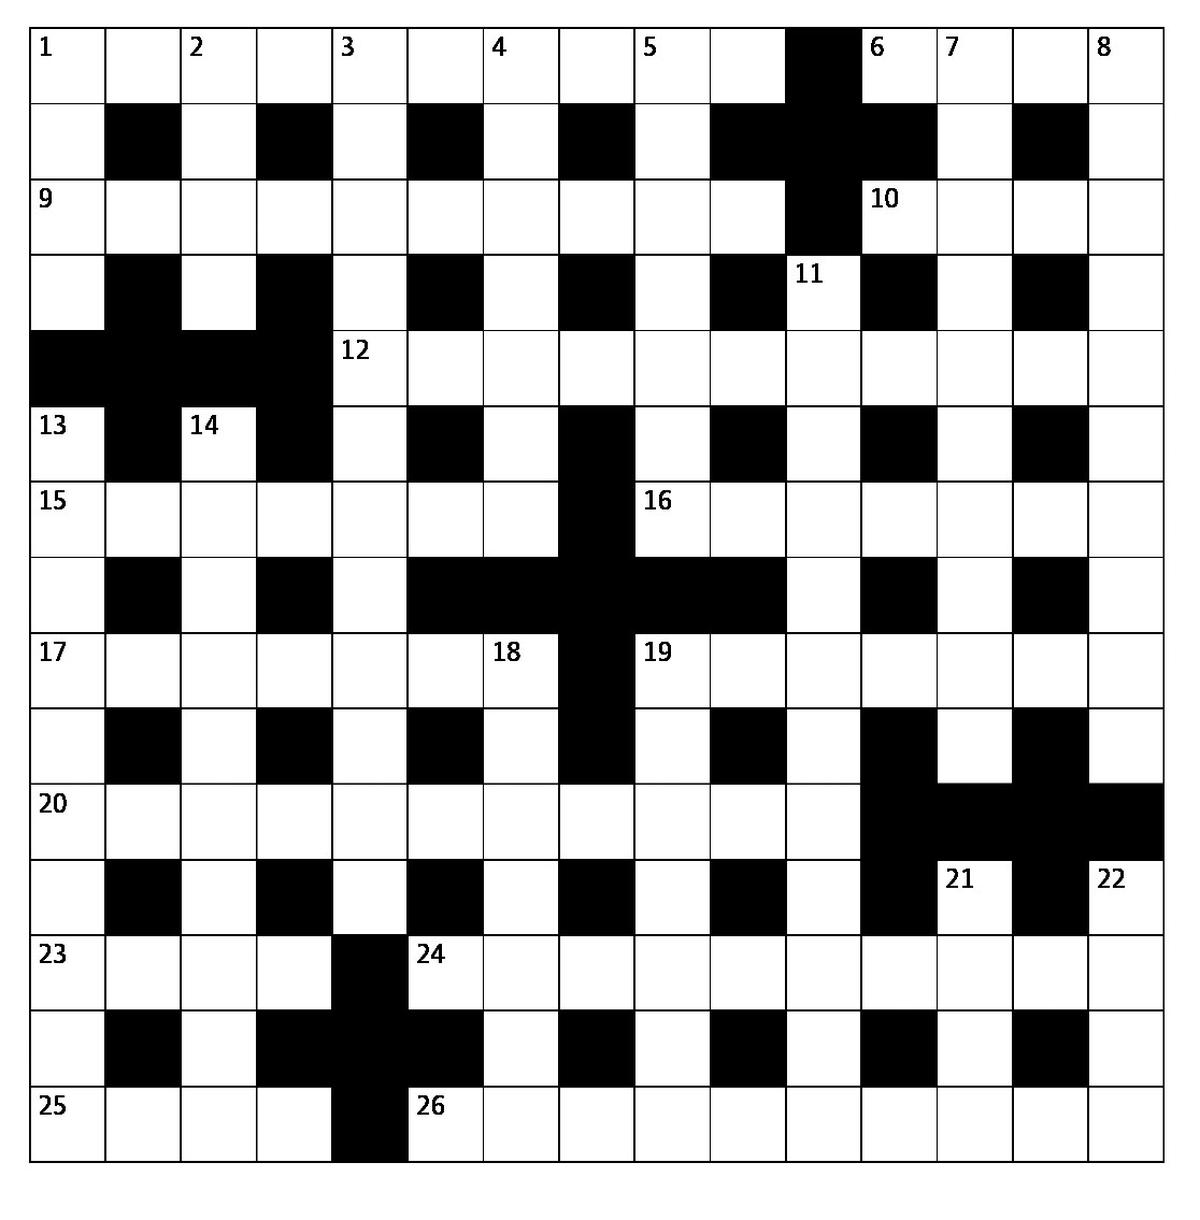 The Sunday Crossword No. 3230